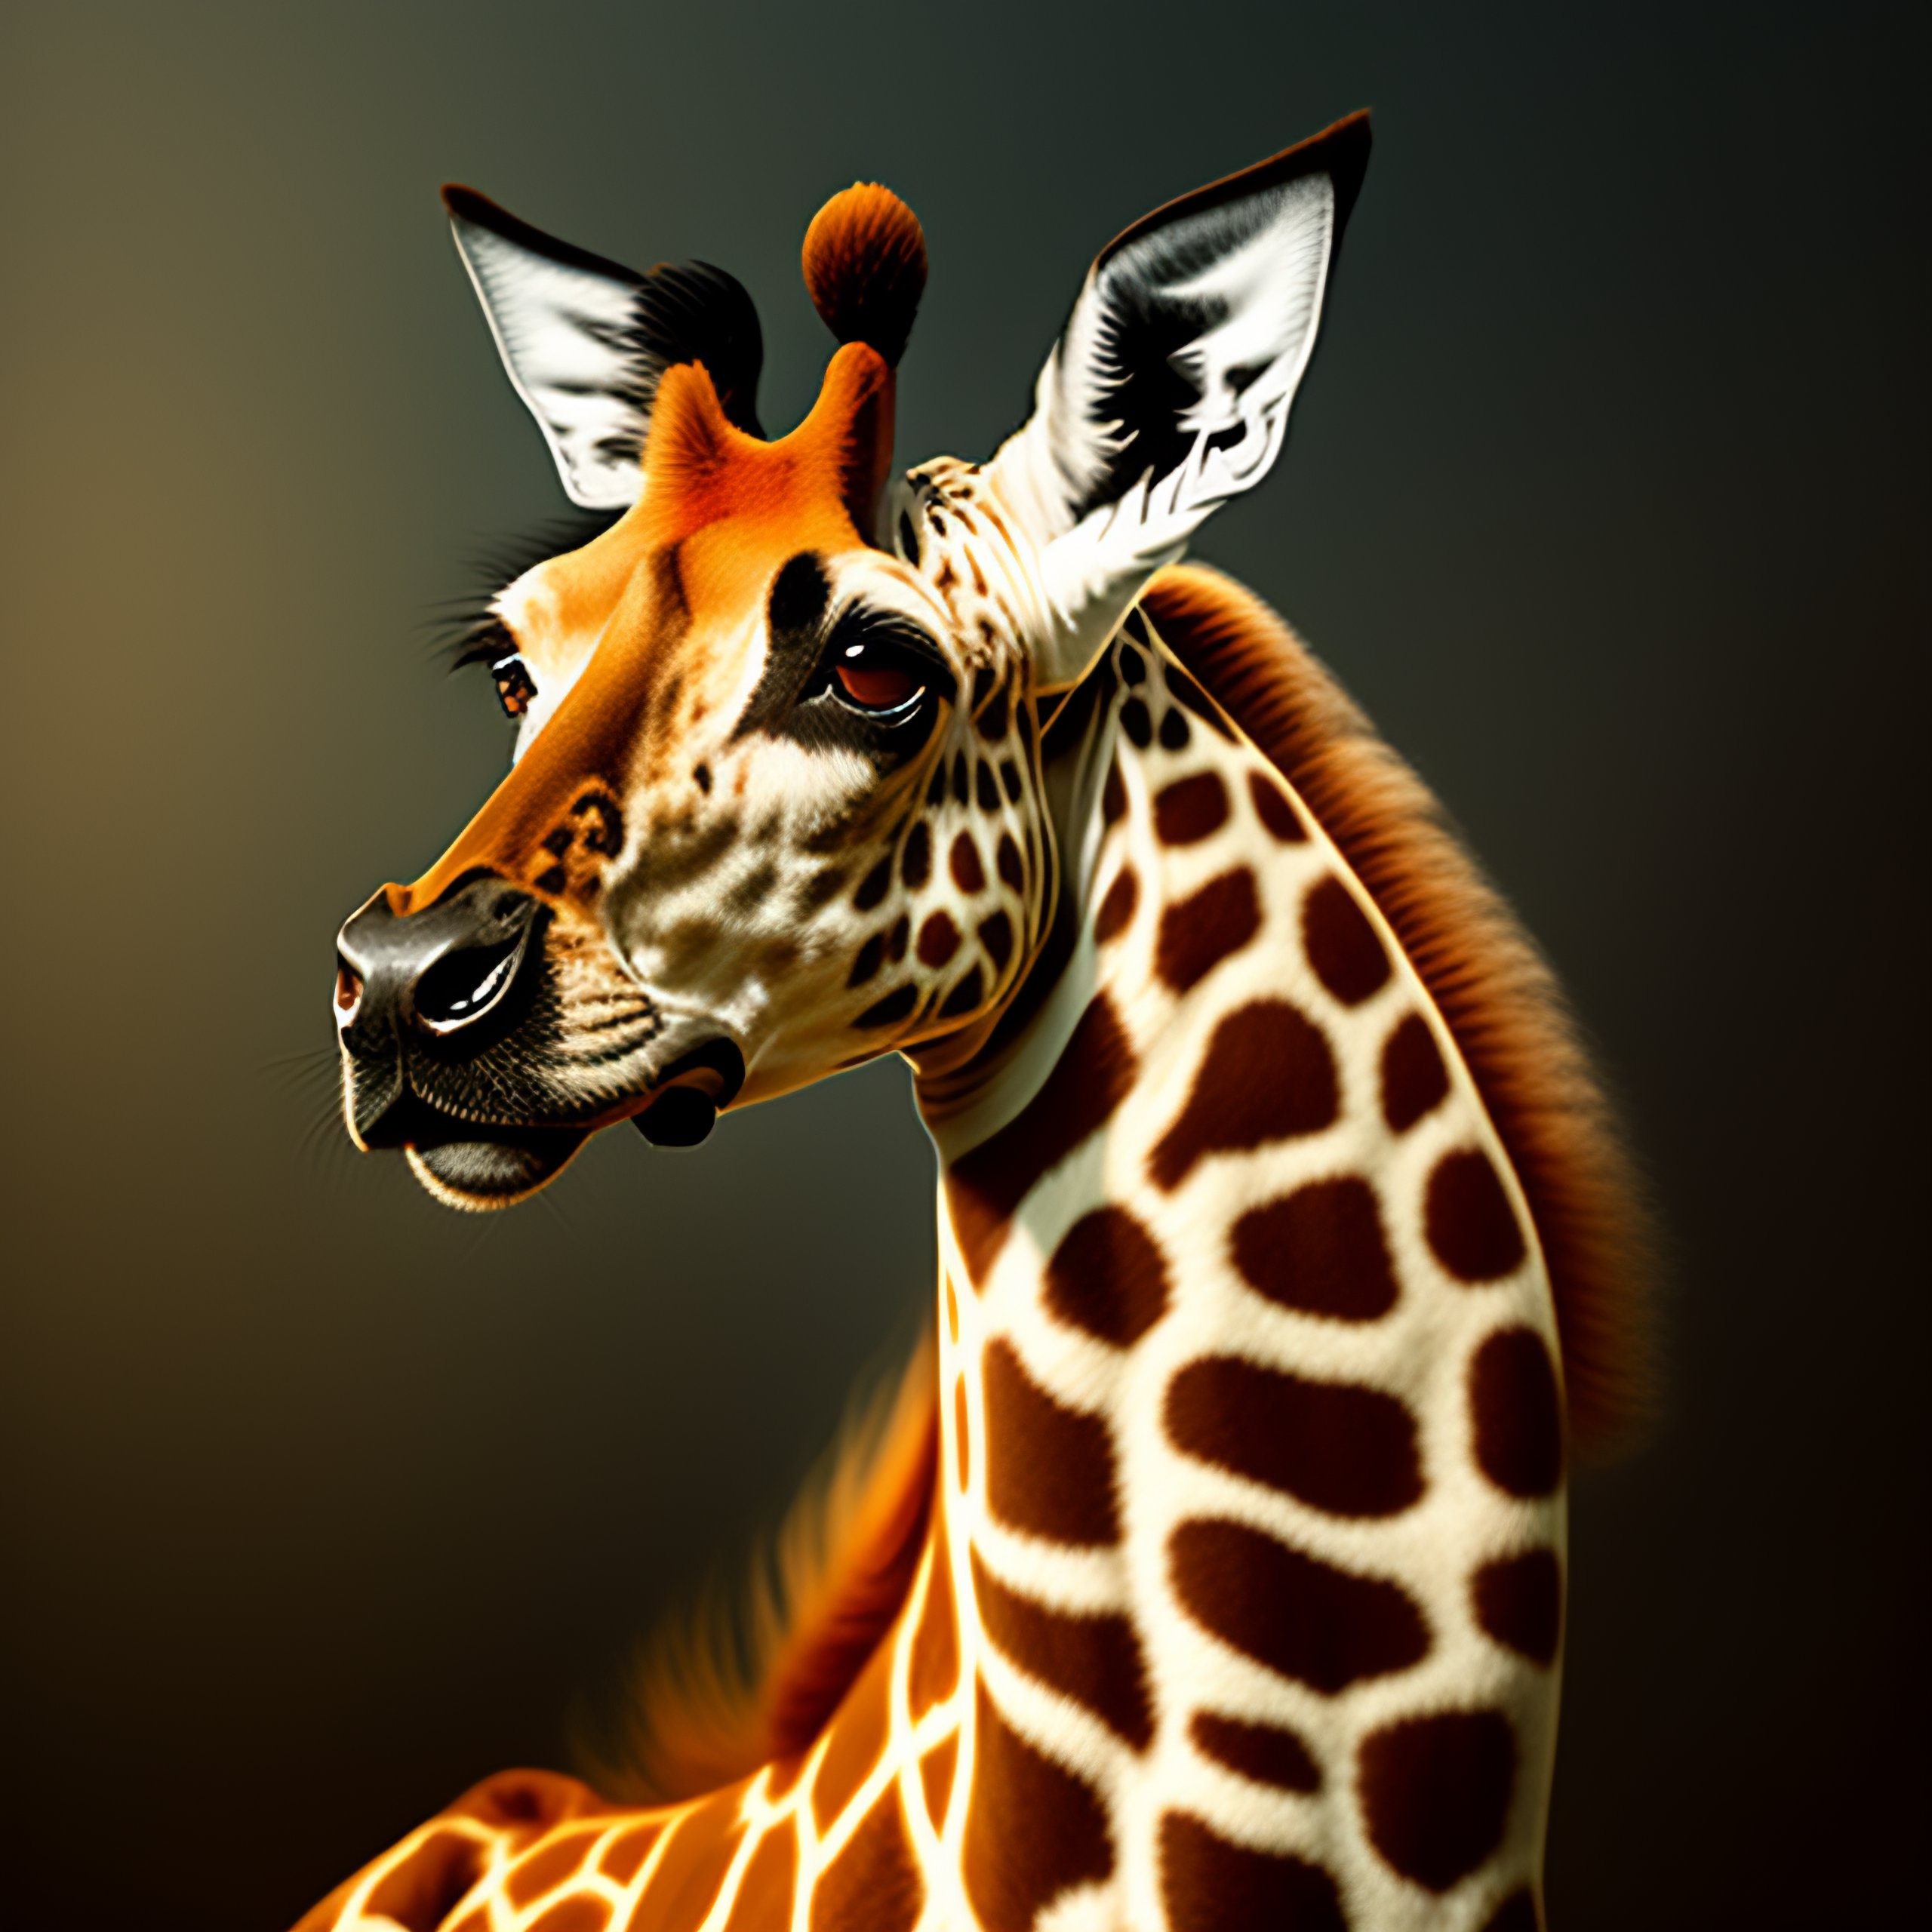 Lexica - Amazing portrait of the elusive dog giraffe hybrid.